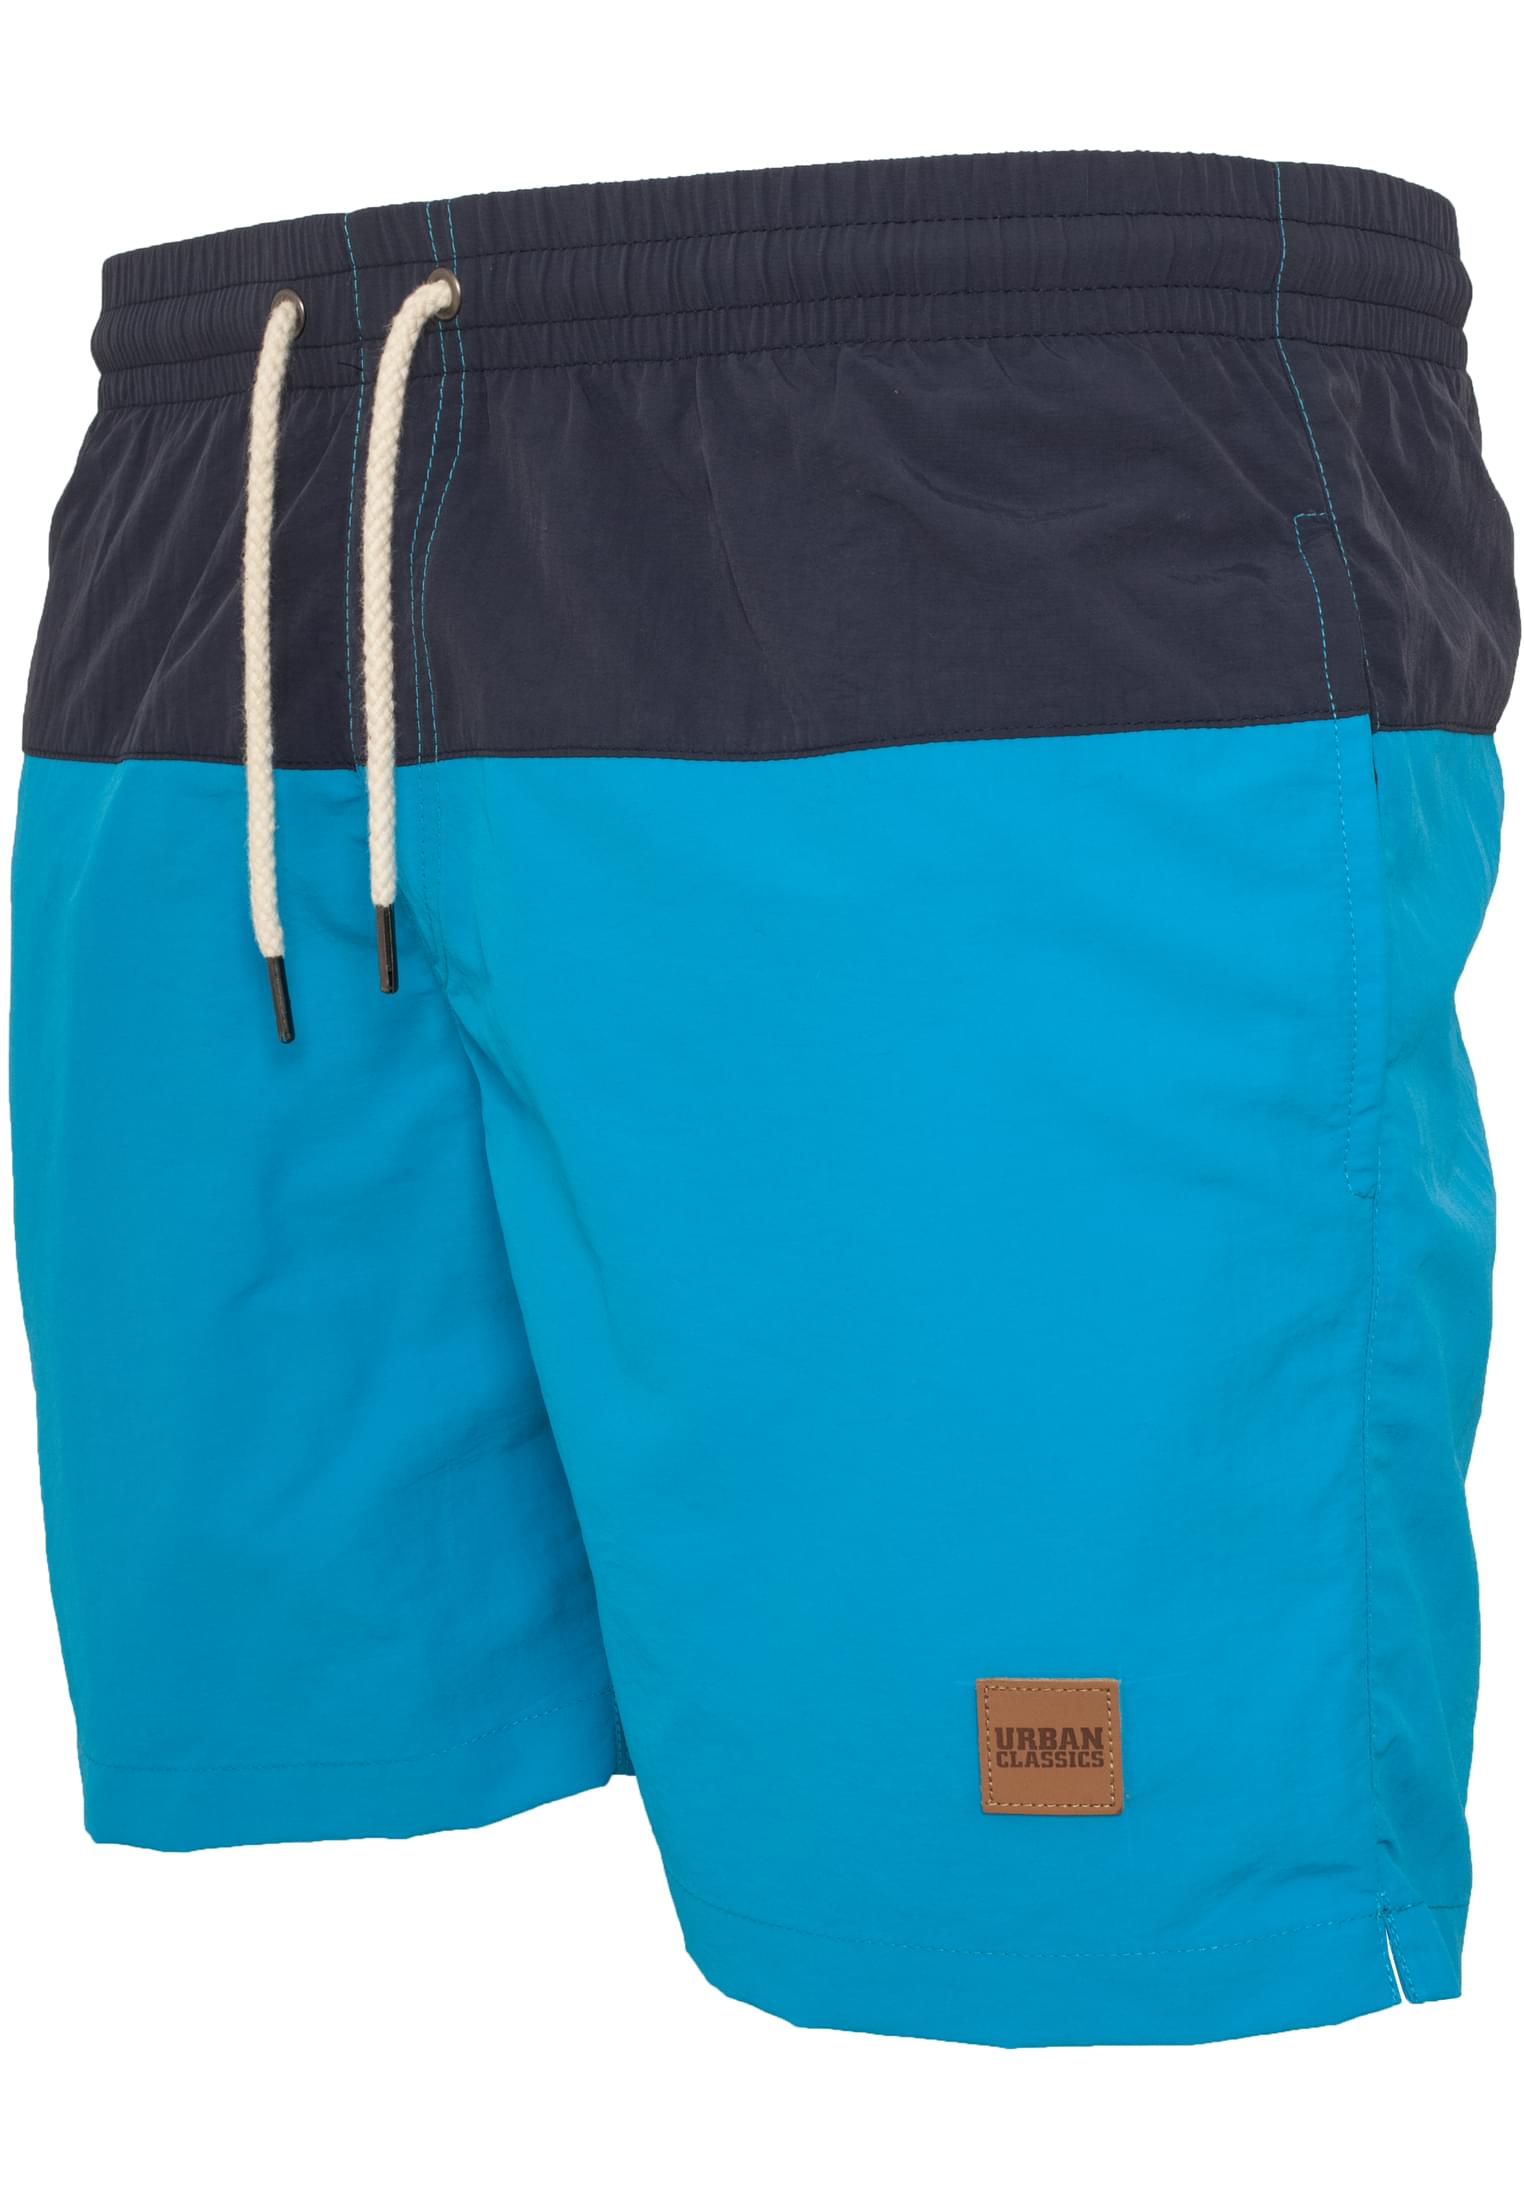 Plus Size Block Swim Shorts in Farbe nvy/tur